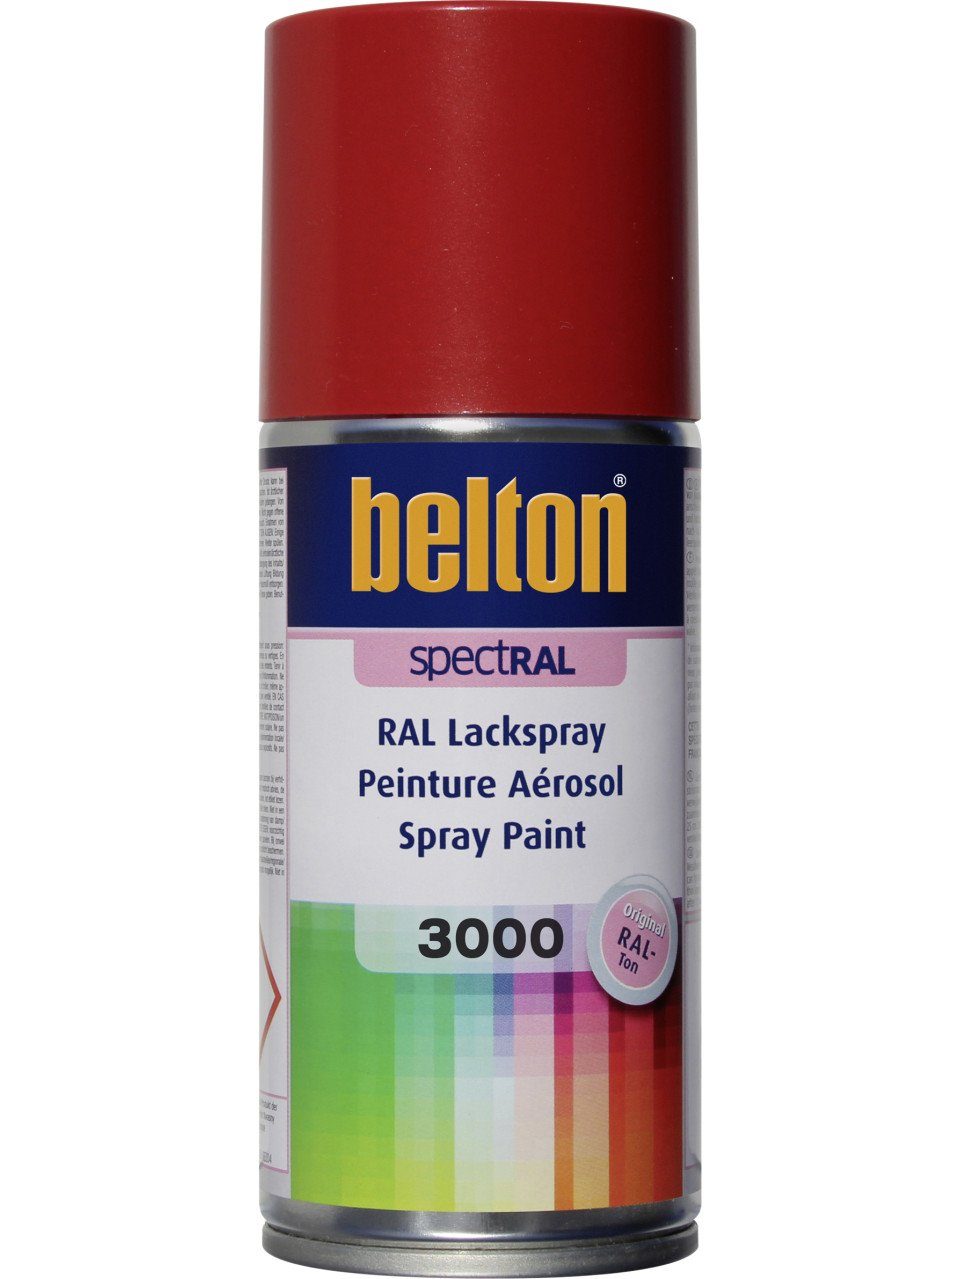 150 Lackspray Spectral feuerrot Belton Sprühlack belton ml